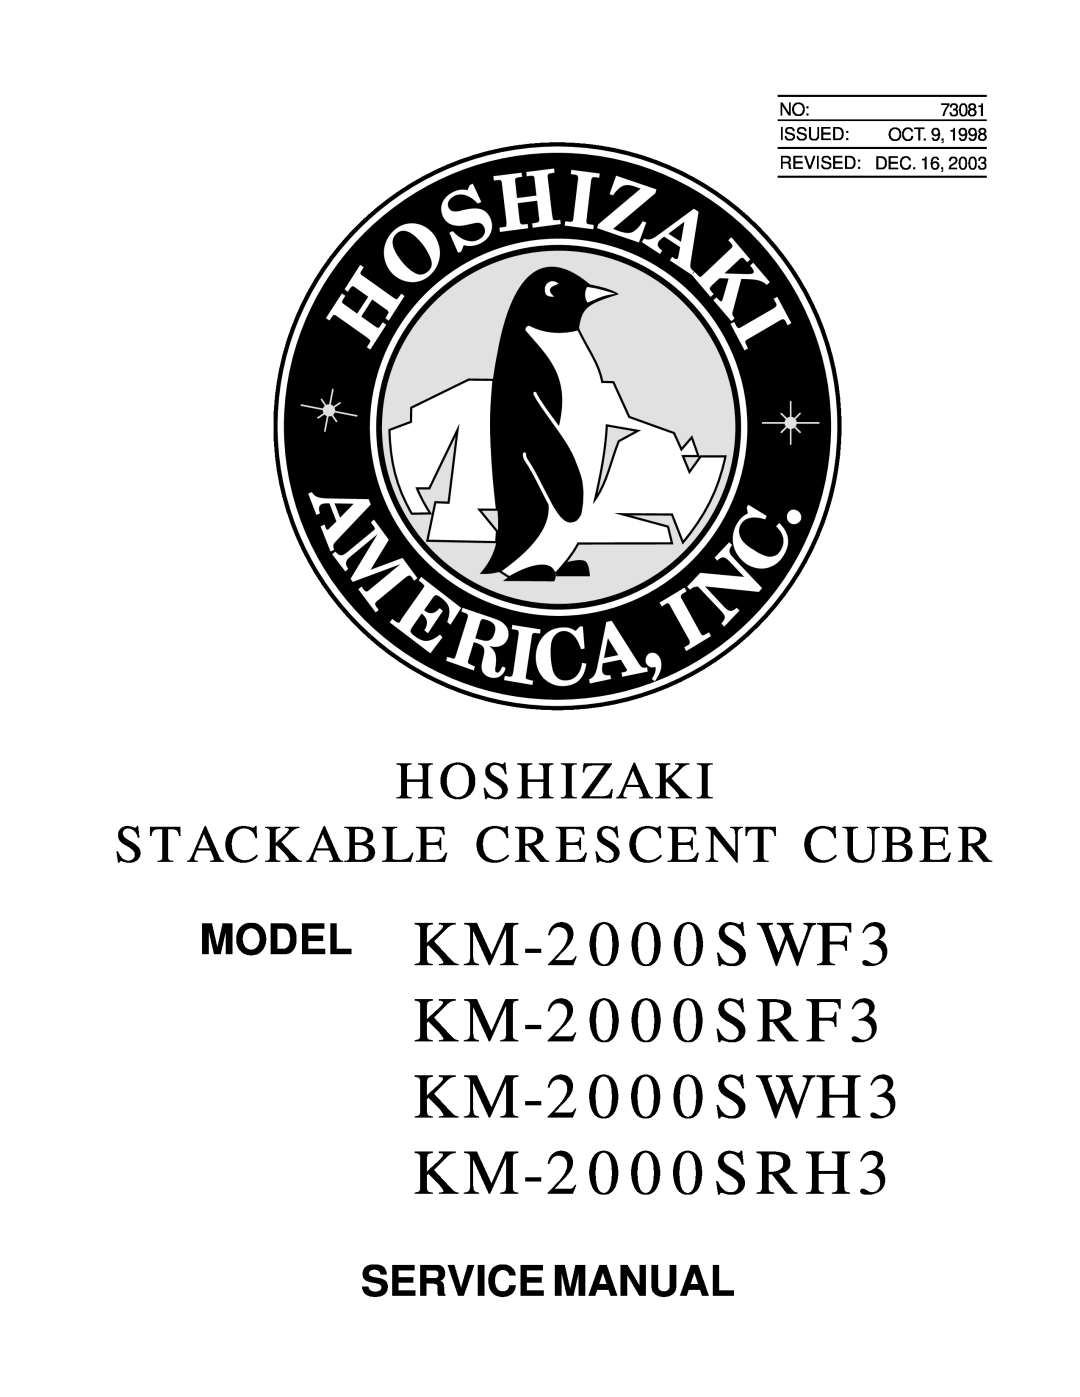 Hoshizaki service manual MODEL KM-2000SWF3 KM-2000SRF3 KM-2000SWH3 KM-2000SRH3, Hoshizaki Stackable Crescent Cuber, Oct 